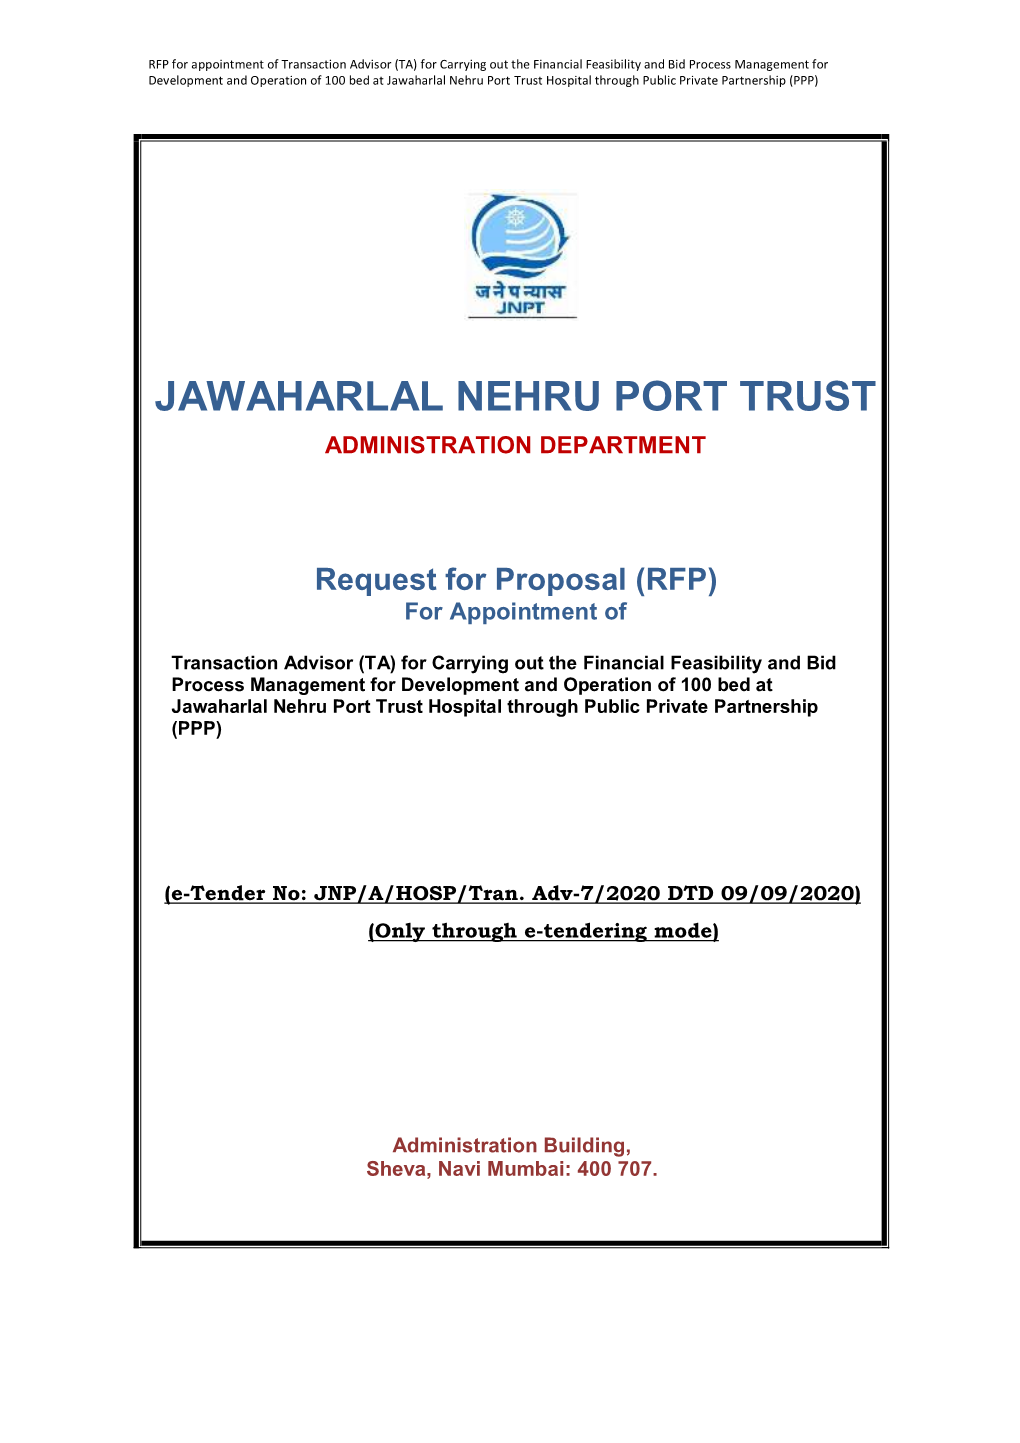 Jawaharlal Nehru Port Trust Hospital Through Public Private Partnership (PPP)